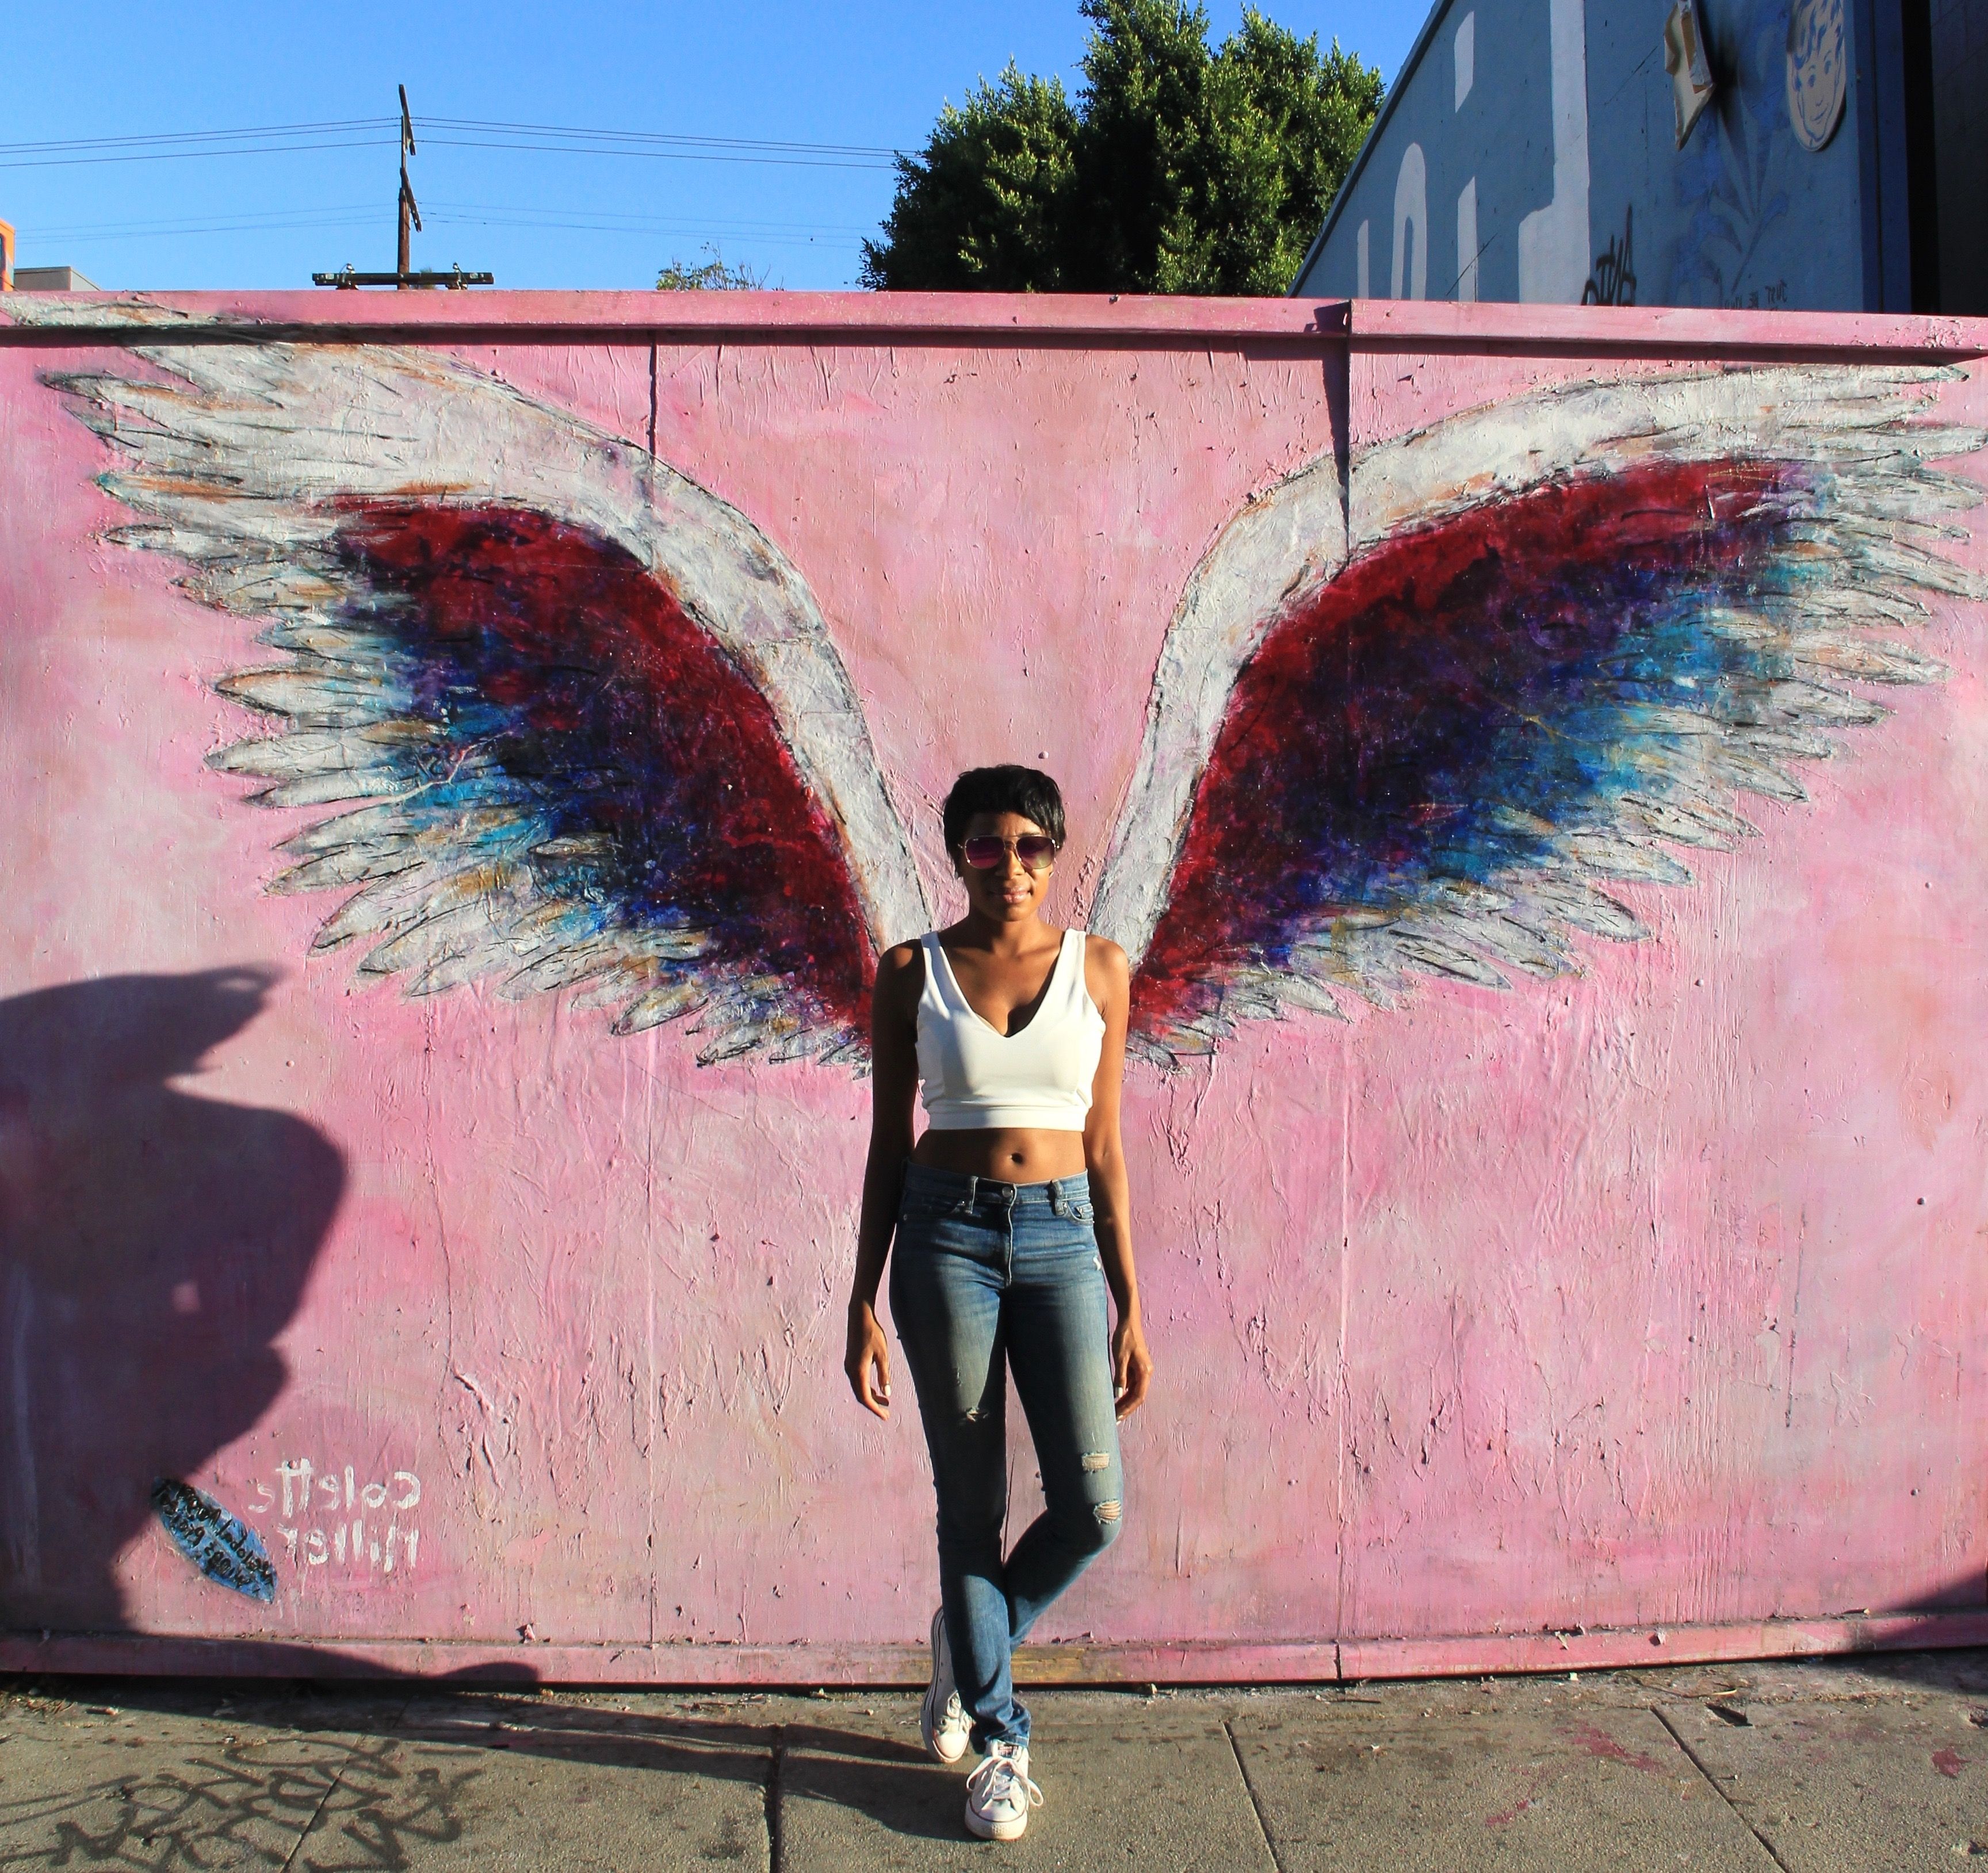 Melrosewallsla Nice Wall Popular Wall Art Los Angeles – Wall For Most Recent Los Angeles Wall Art (View 7 of 15)